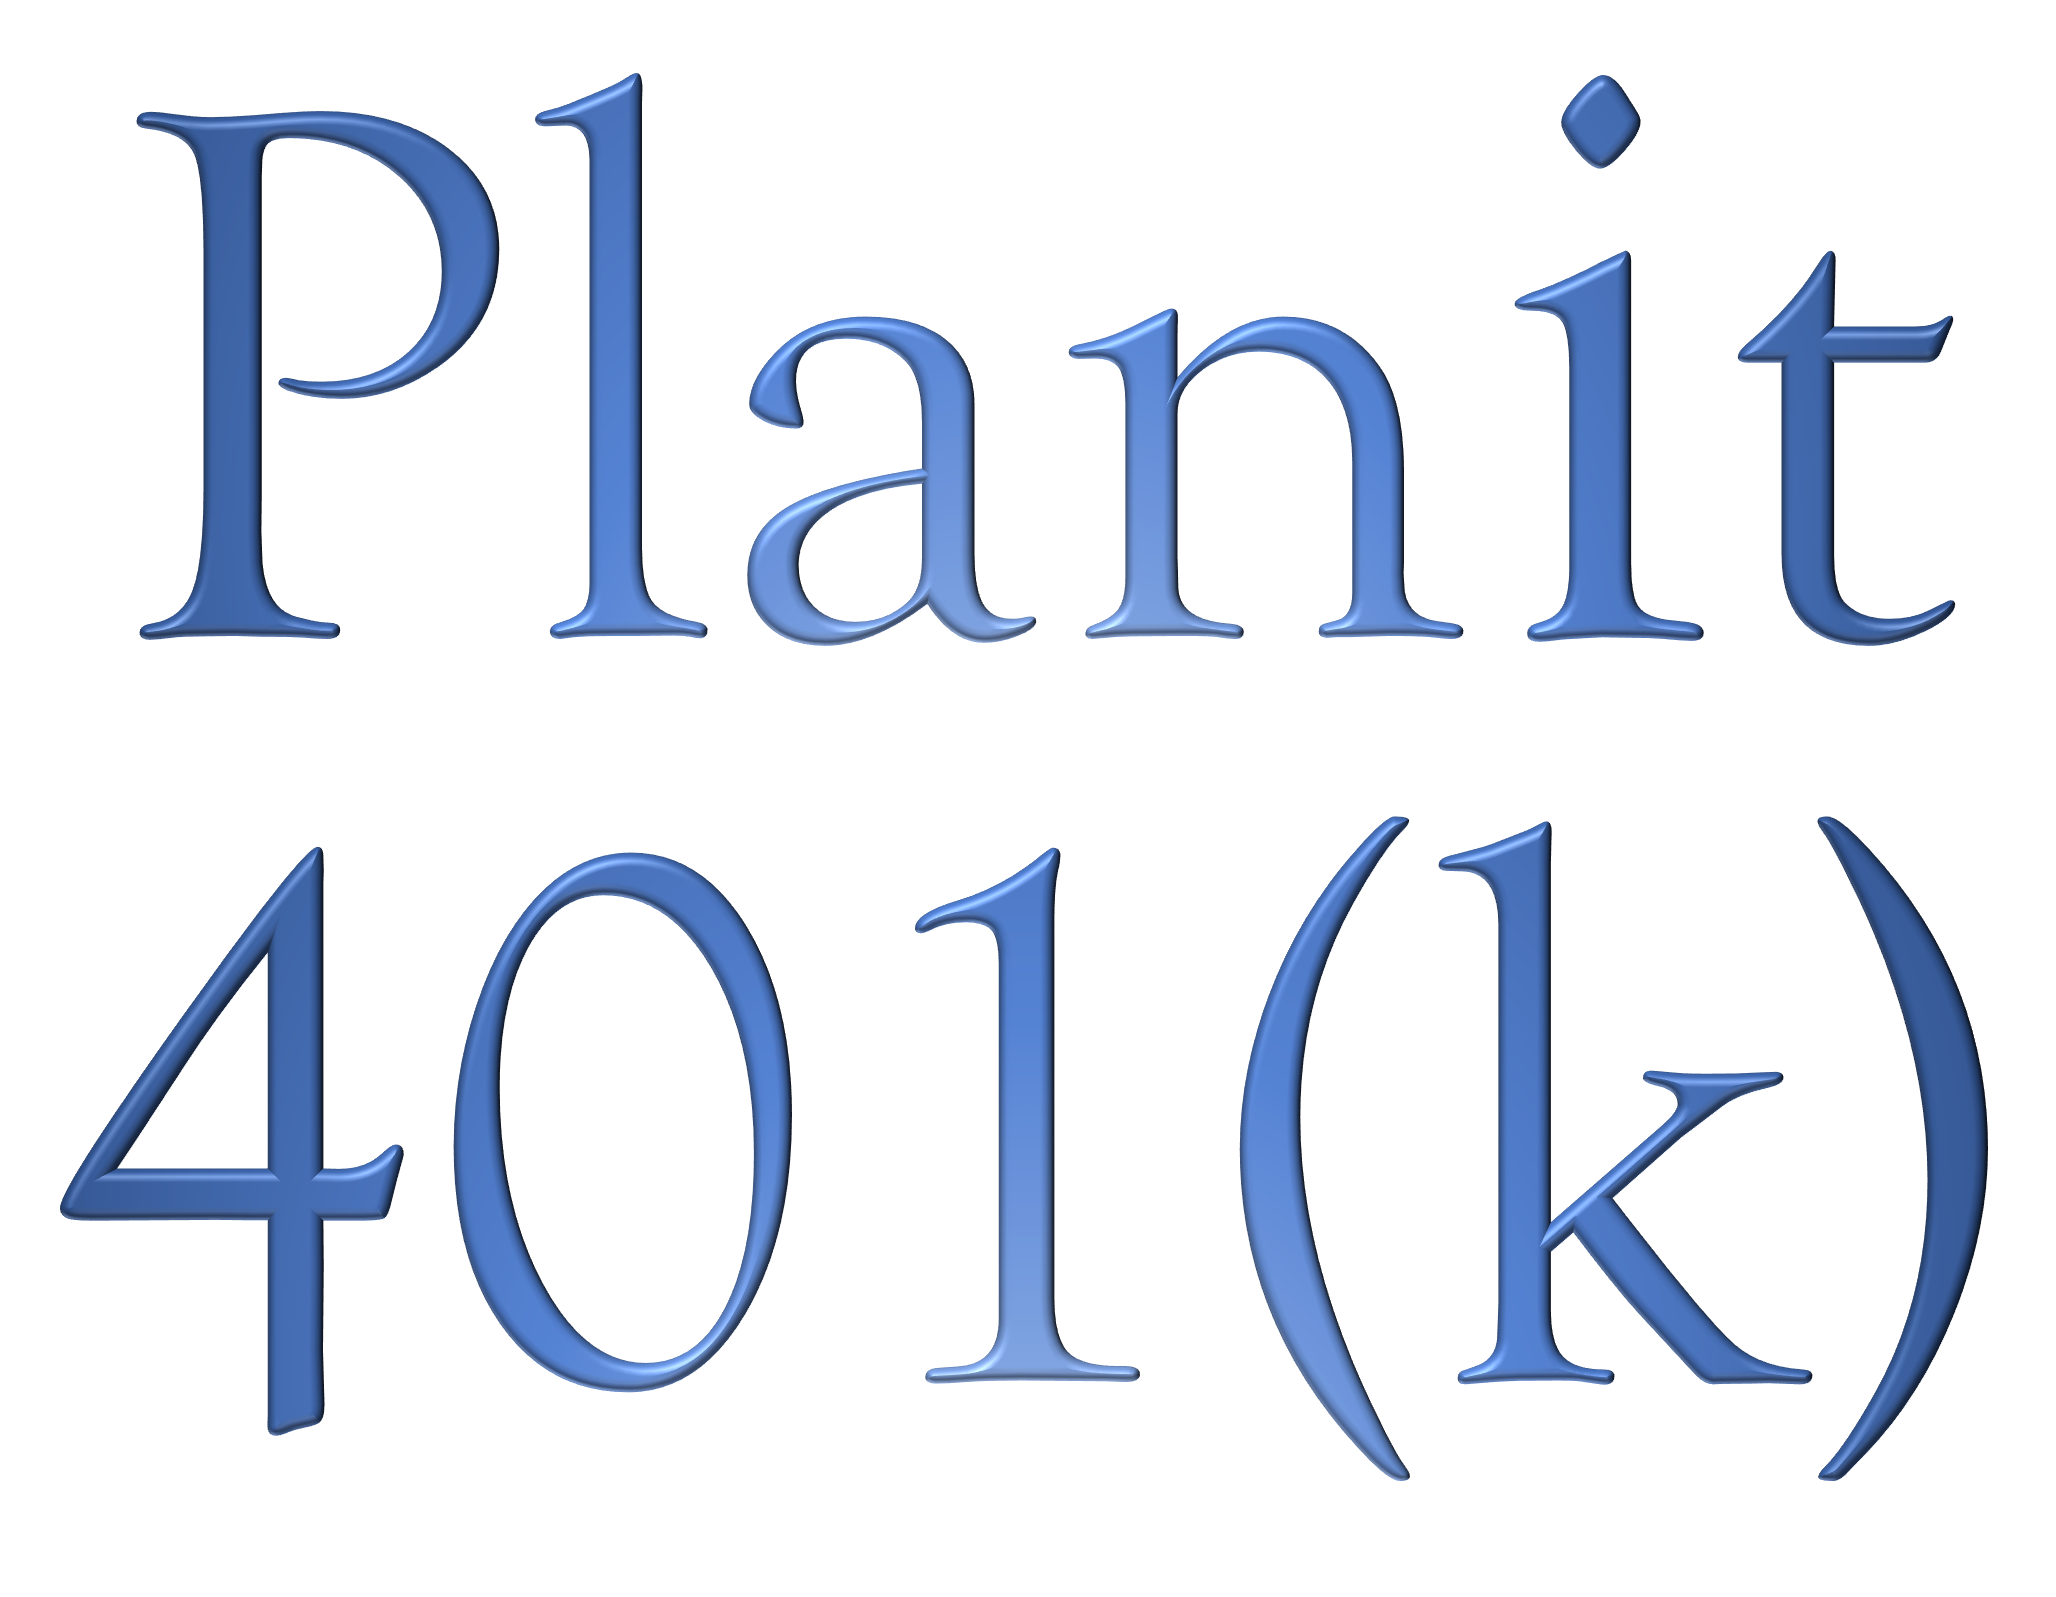 Planit 401k